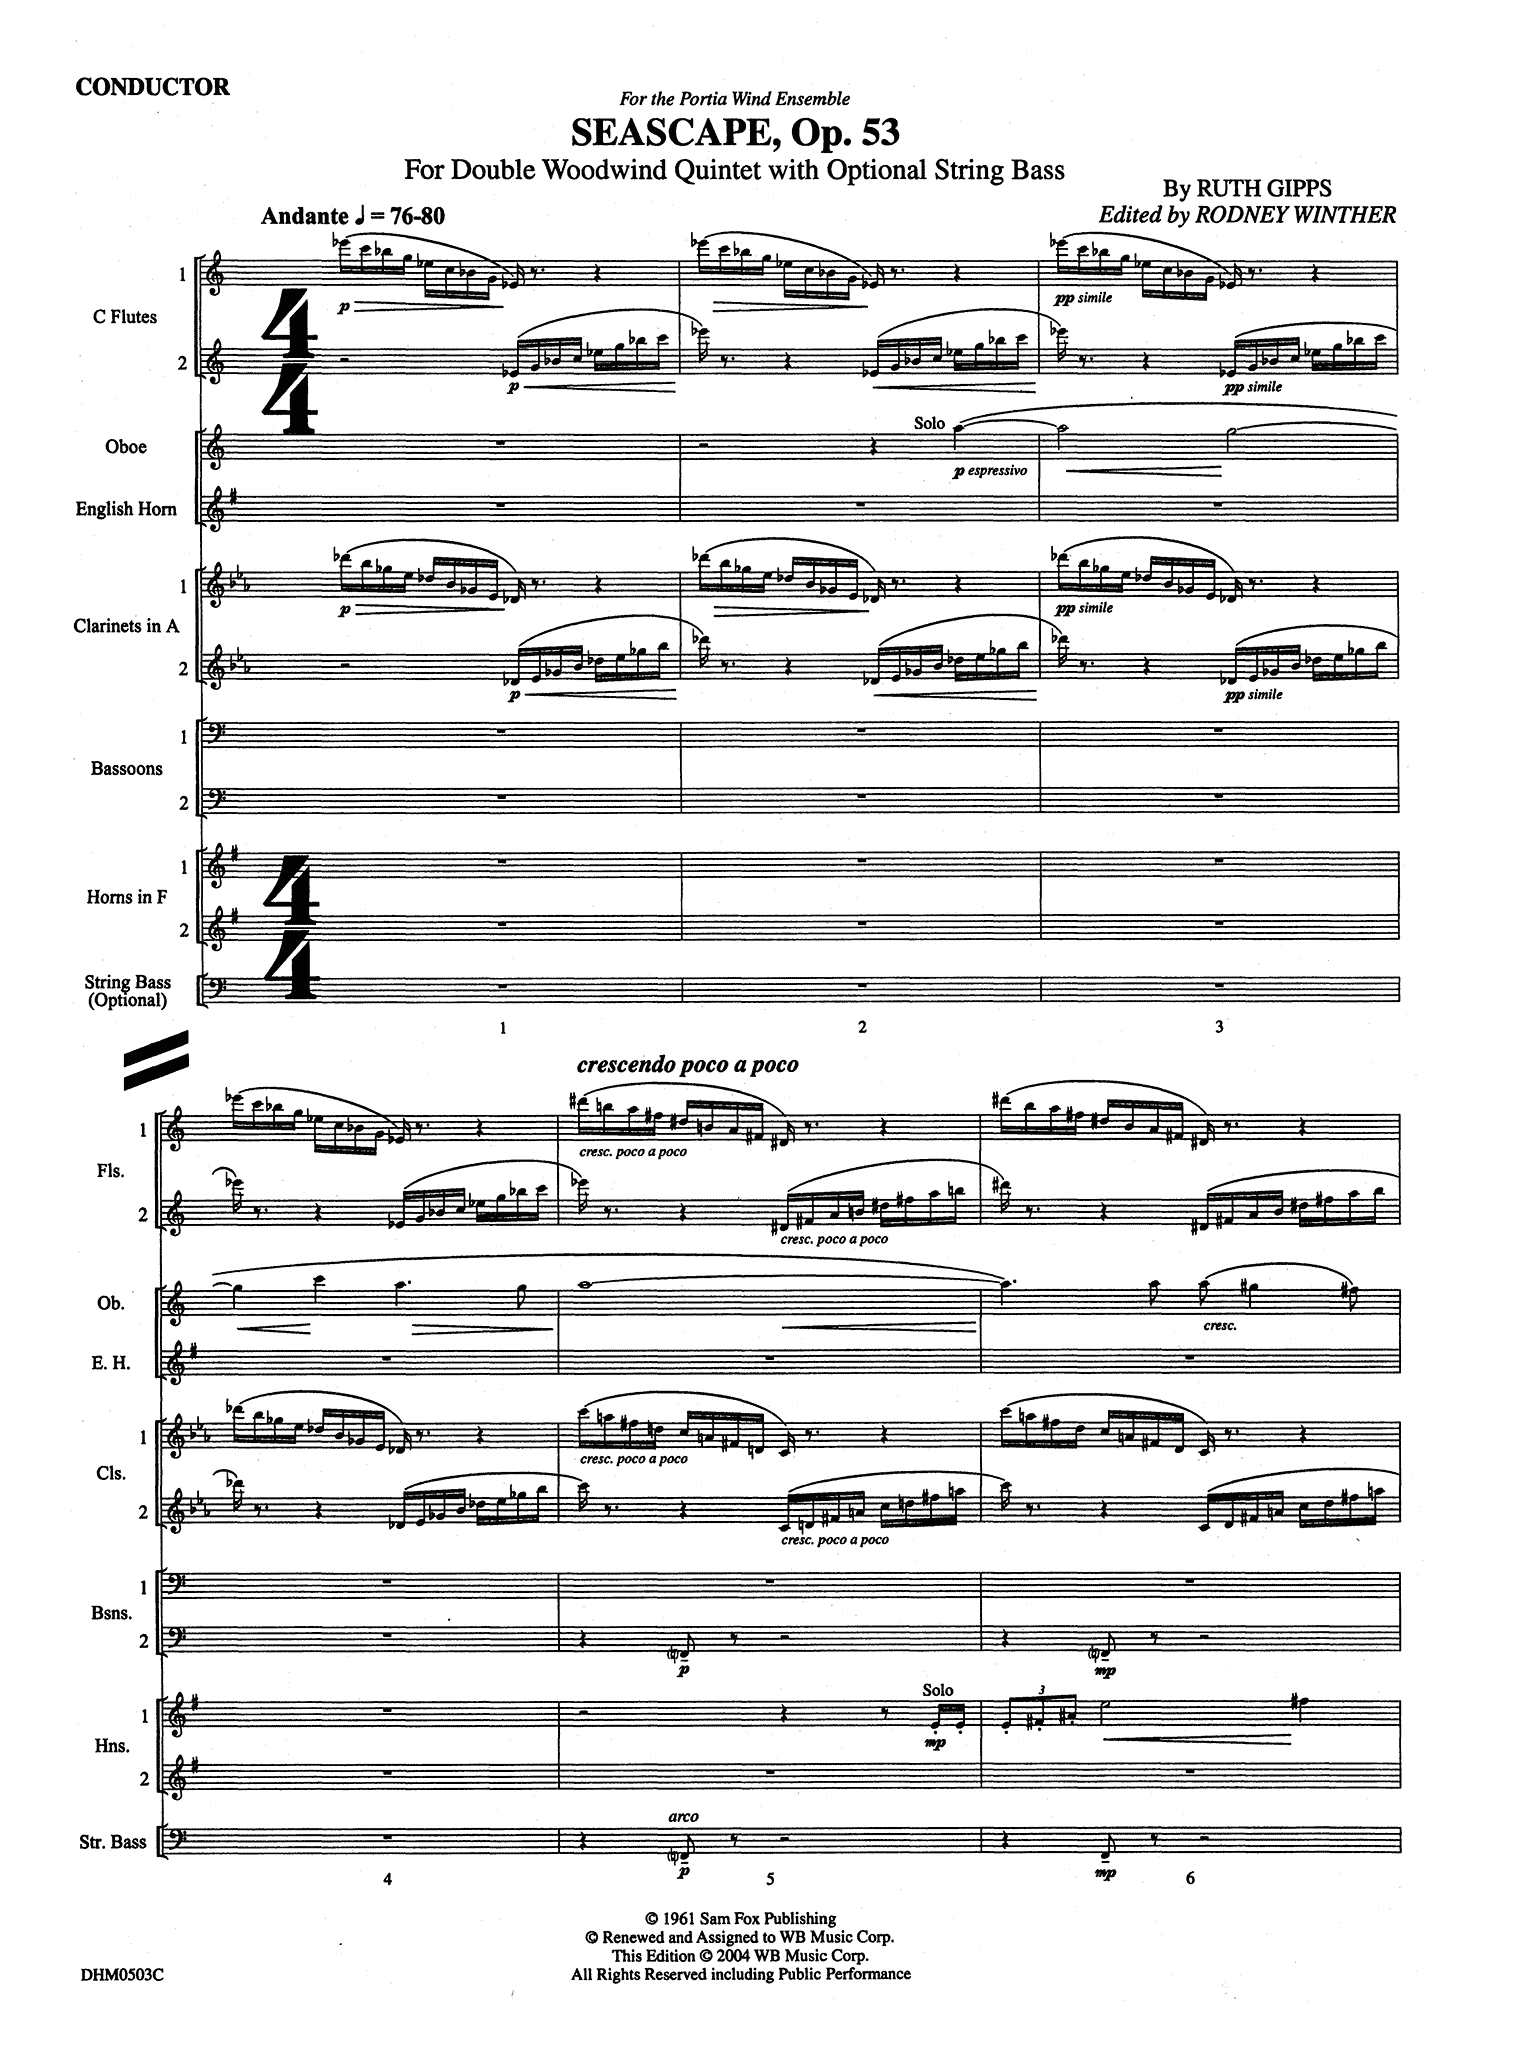 Gipps Seascape, Op. 53 double wind quintet score page 1